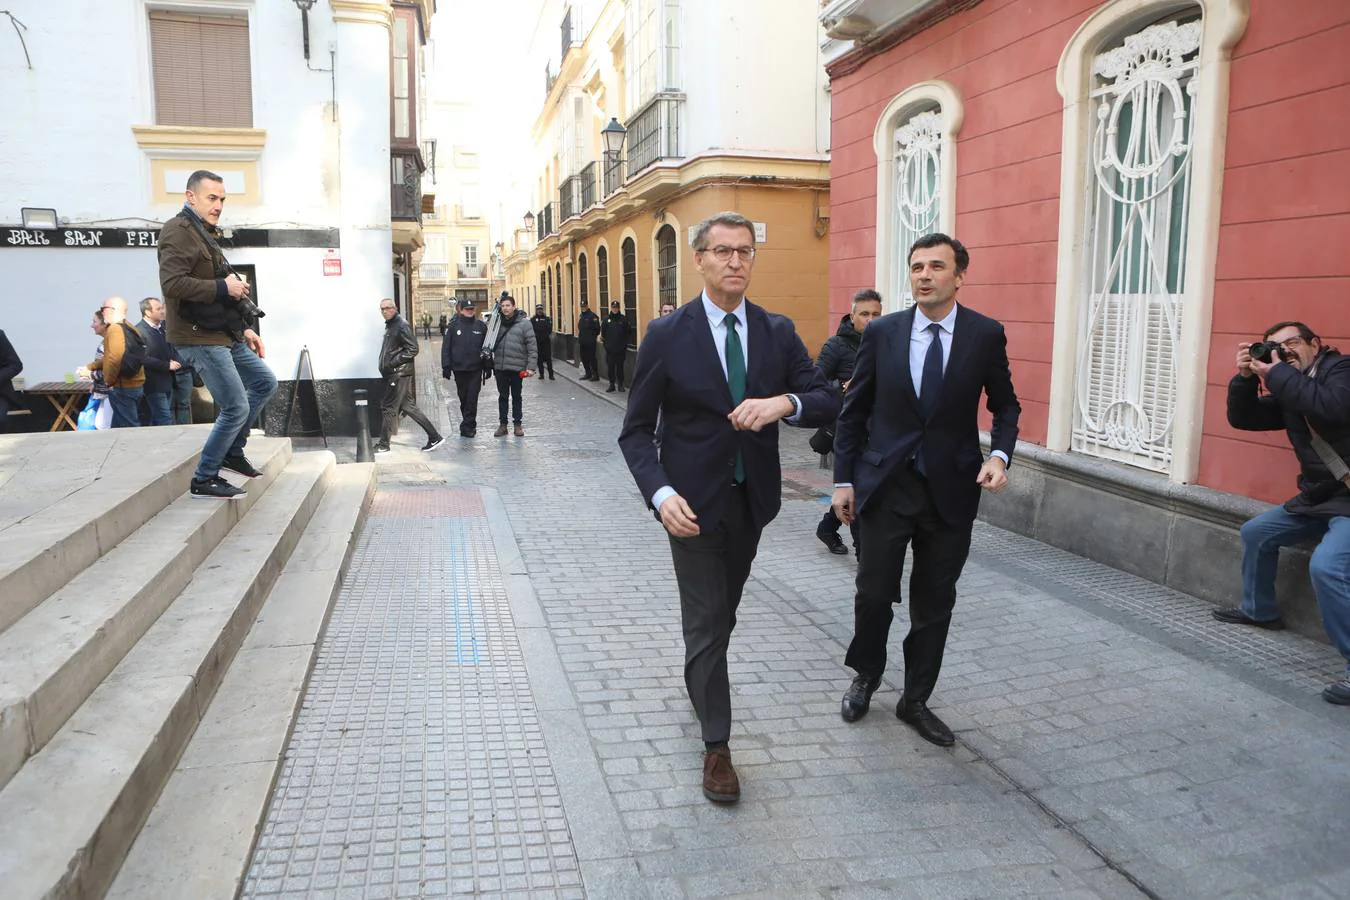 Fotos: Feijóo pasea por las calles de Cádiz junto a Bruno García, candidato del PP por Cádiz